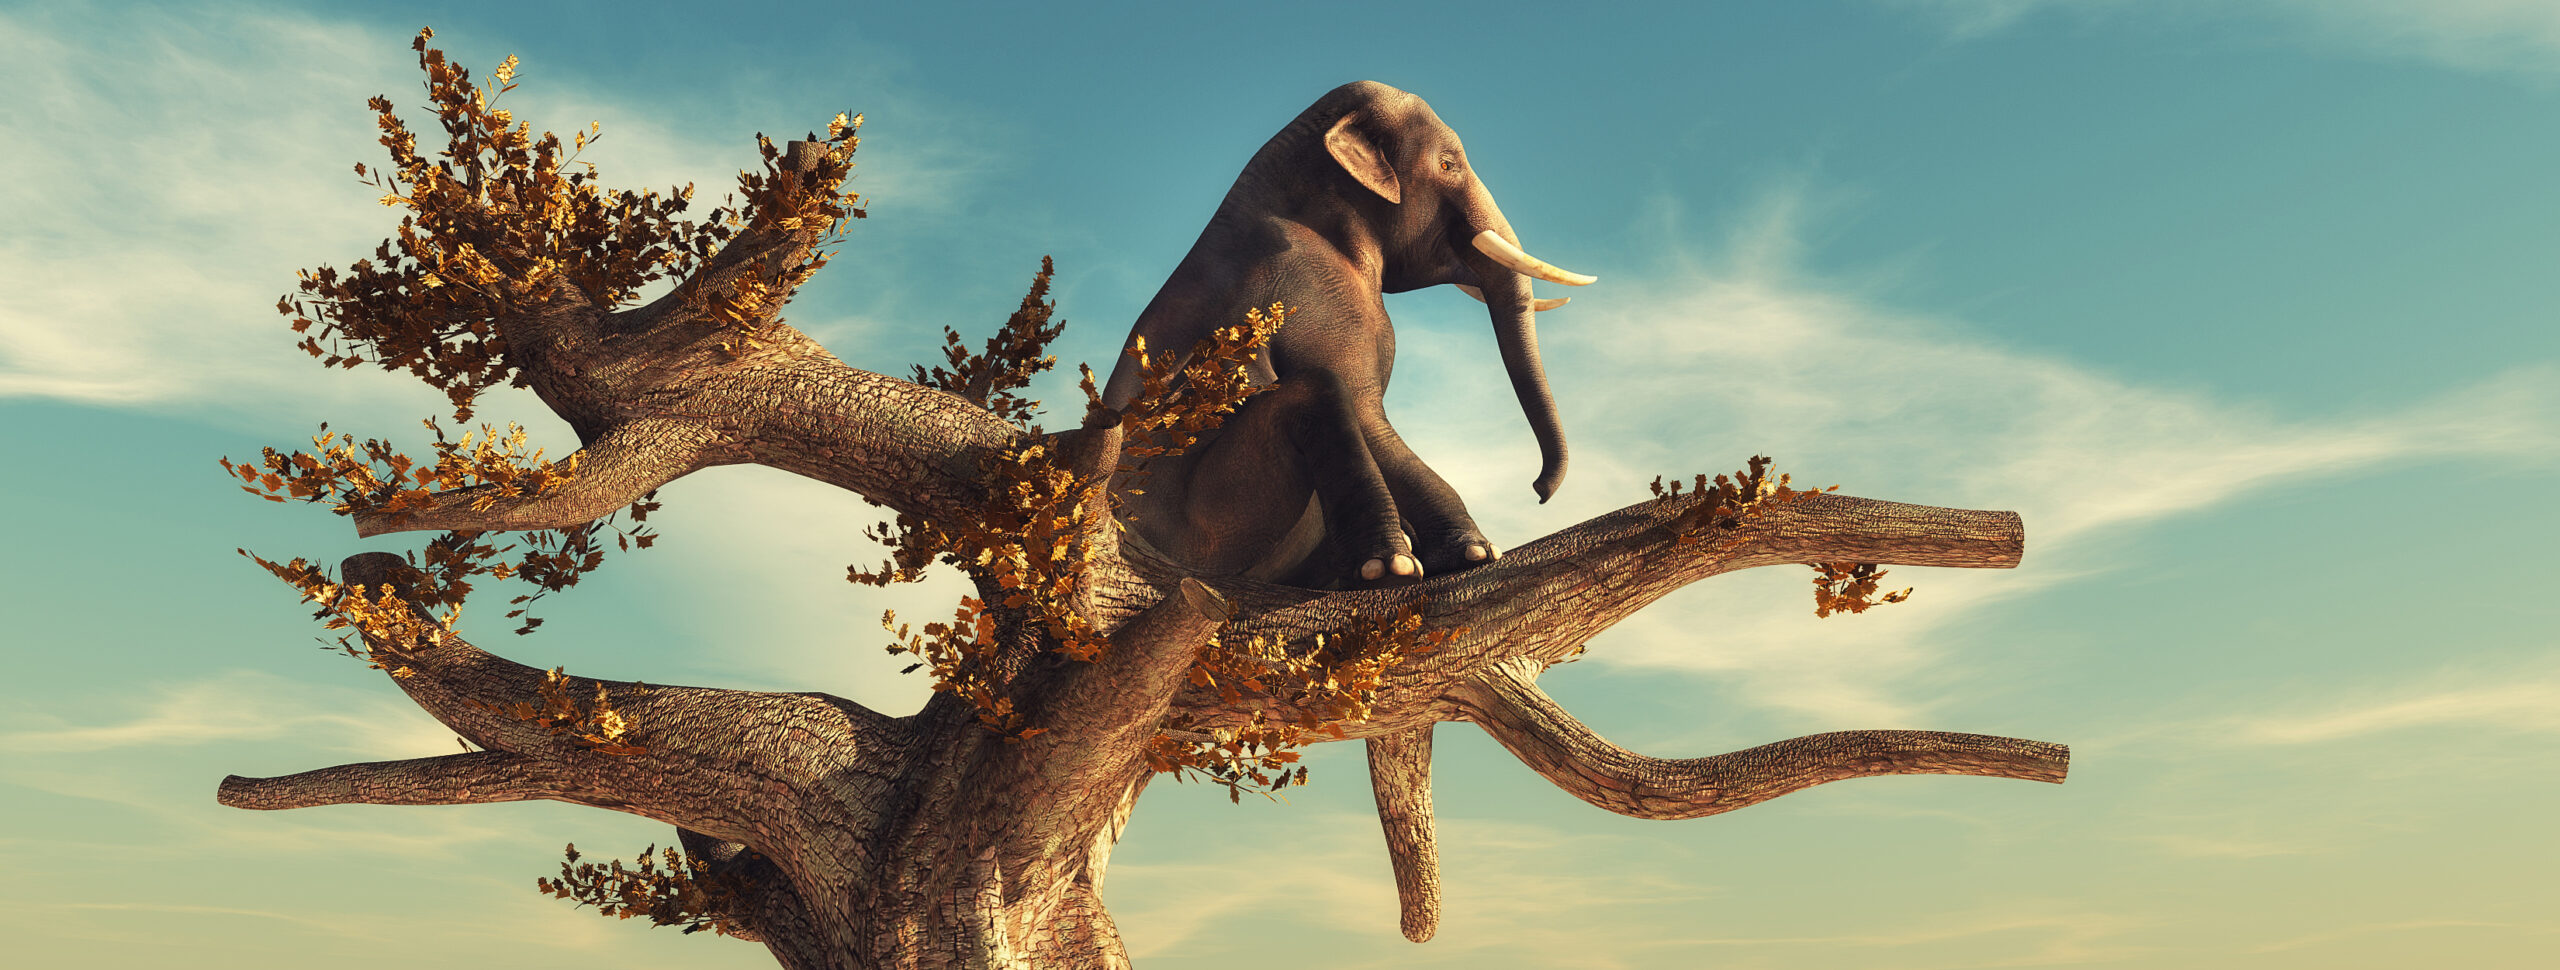 cgi of elephant sitting in a tree